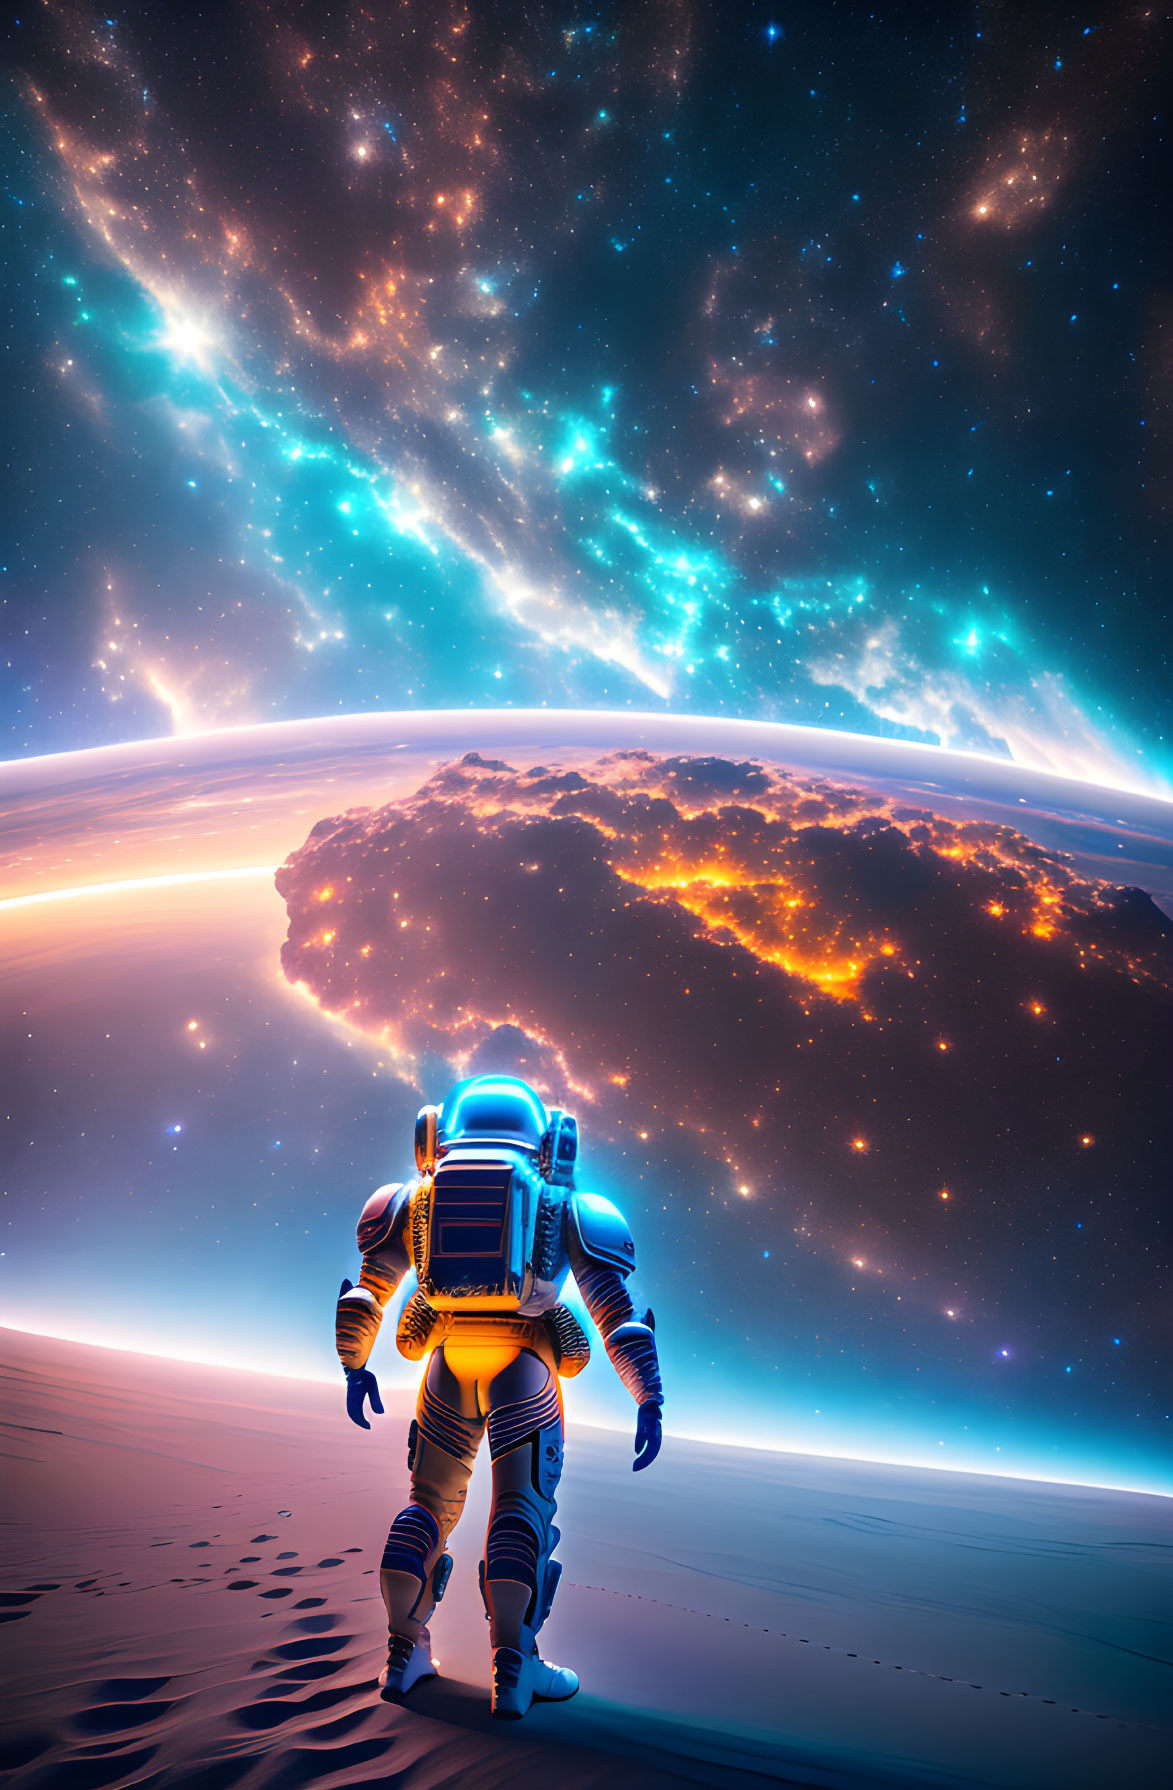 Astronaut on alien planet views colorful nebula